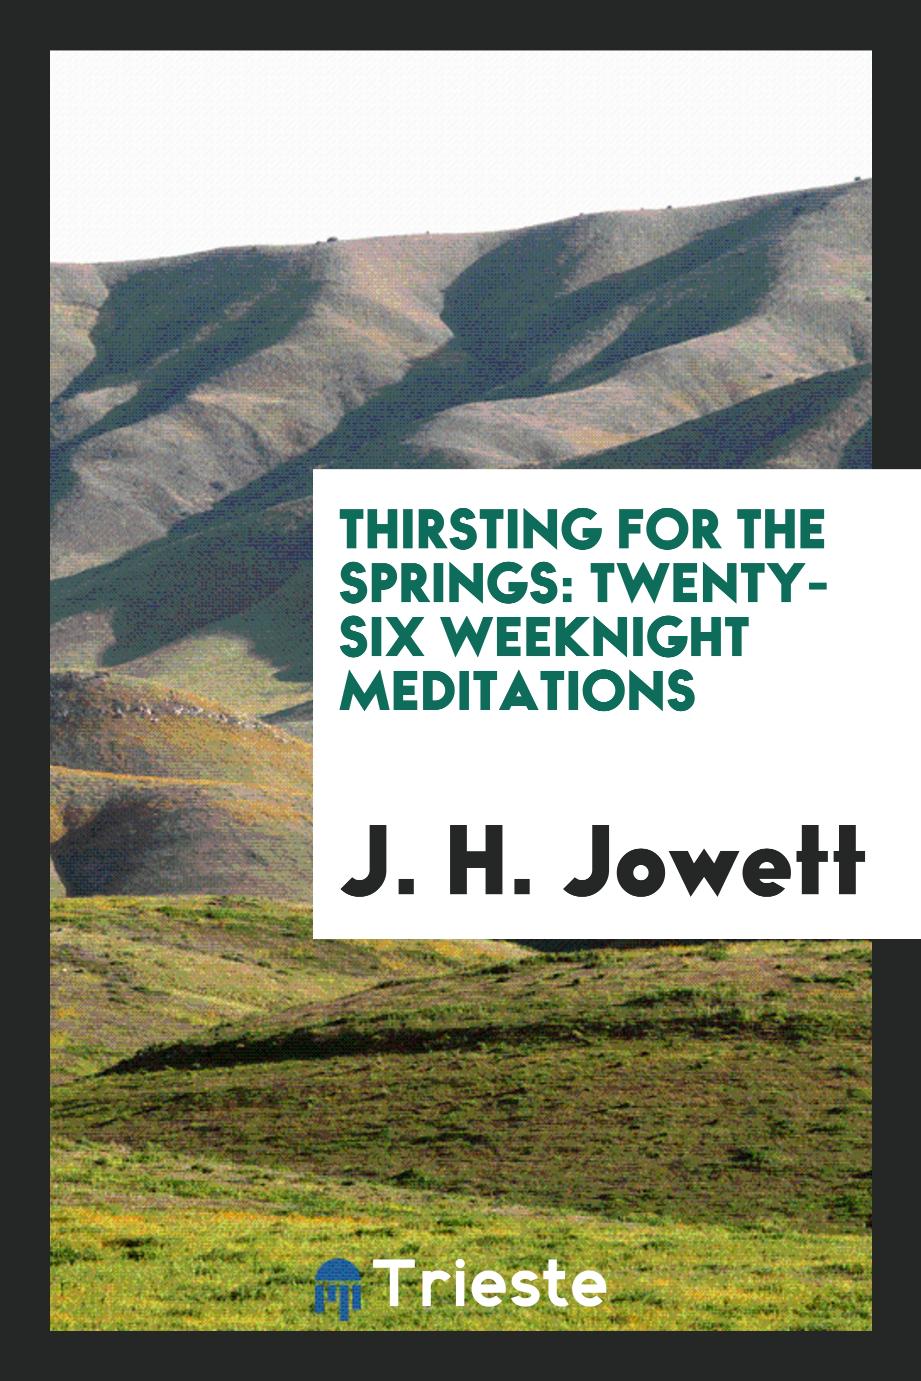 Thirsting for the Springs: Twenty-Six Weeknight Meditations